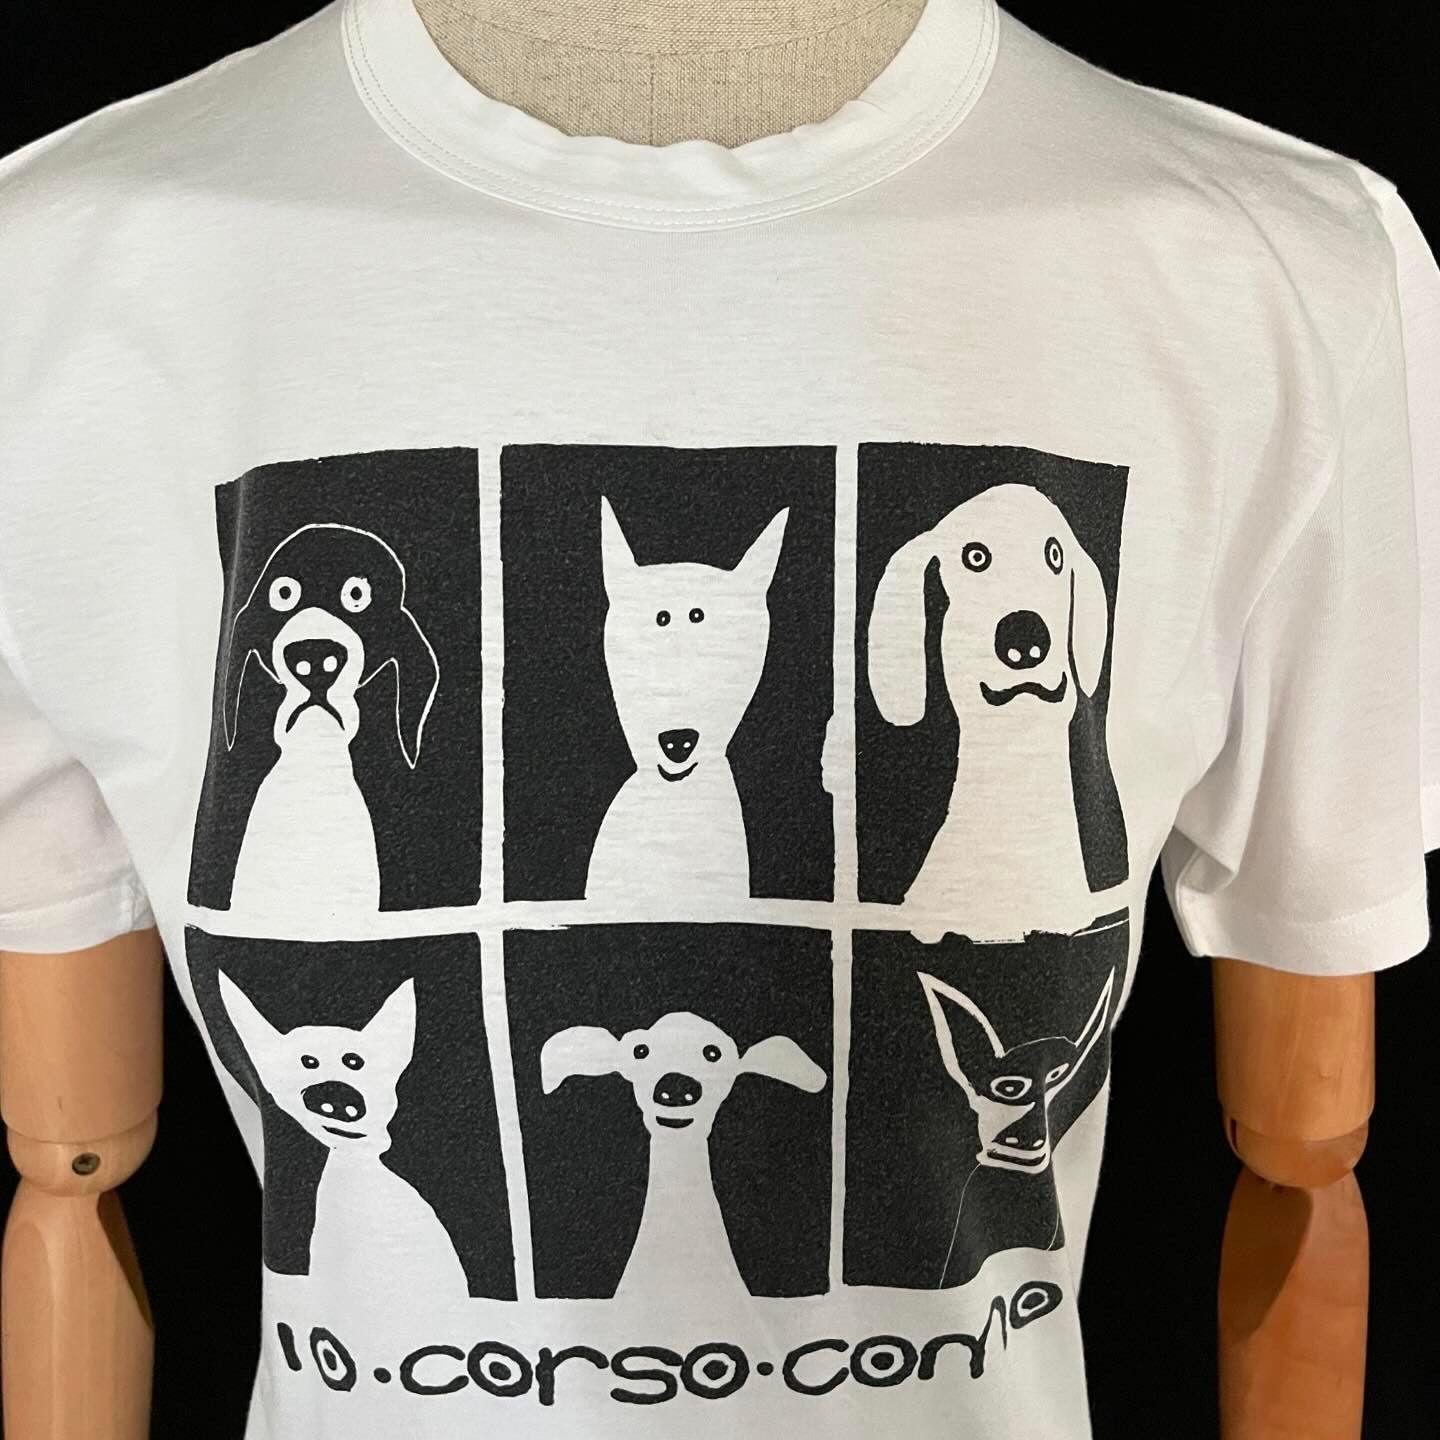 10 CORSO COMO - 10 CORSO COMO T-Shirt - AVVIIVVA.COM